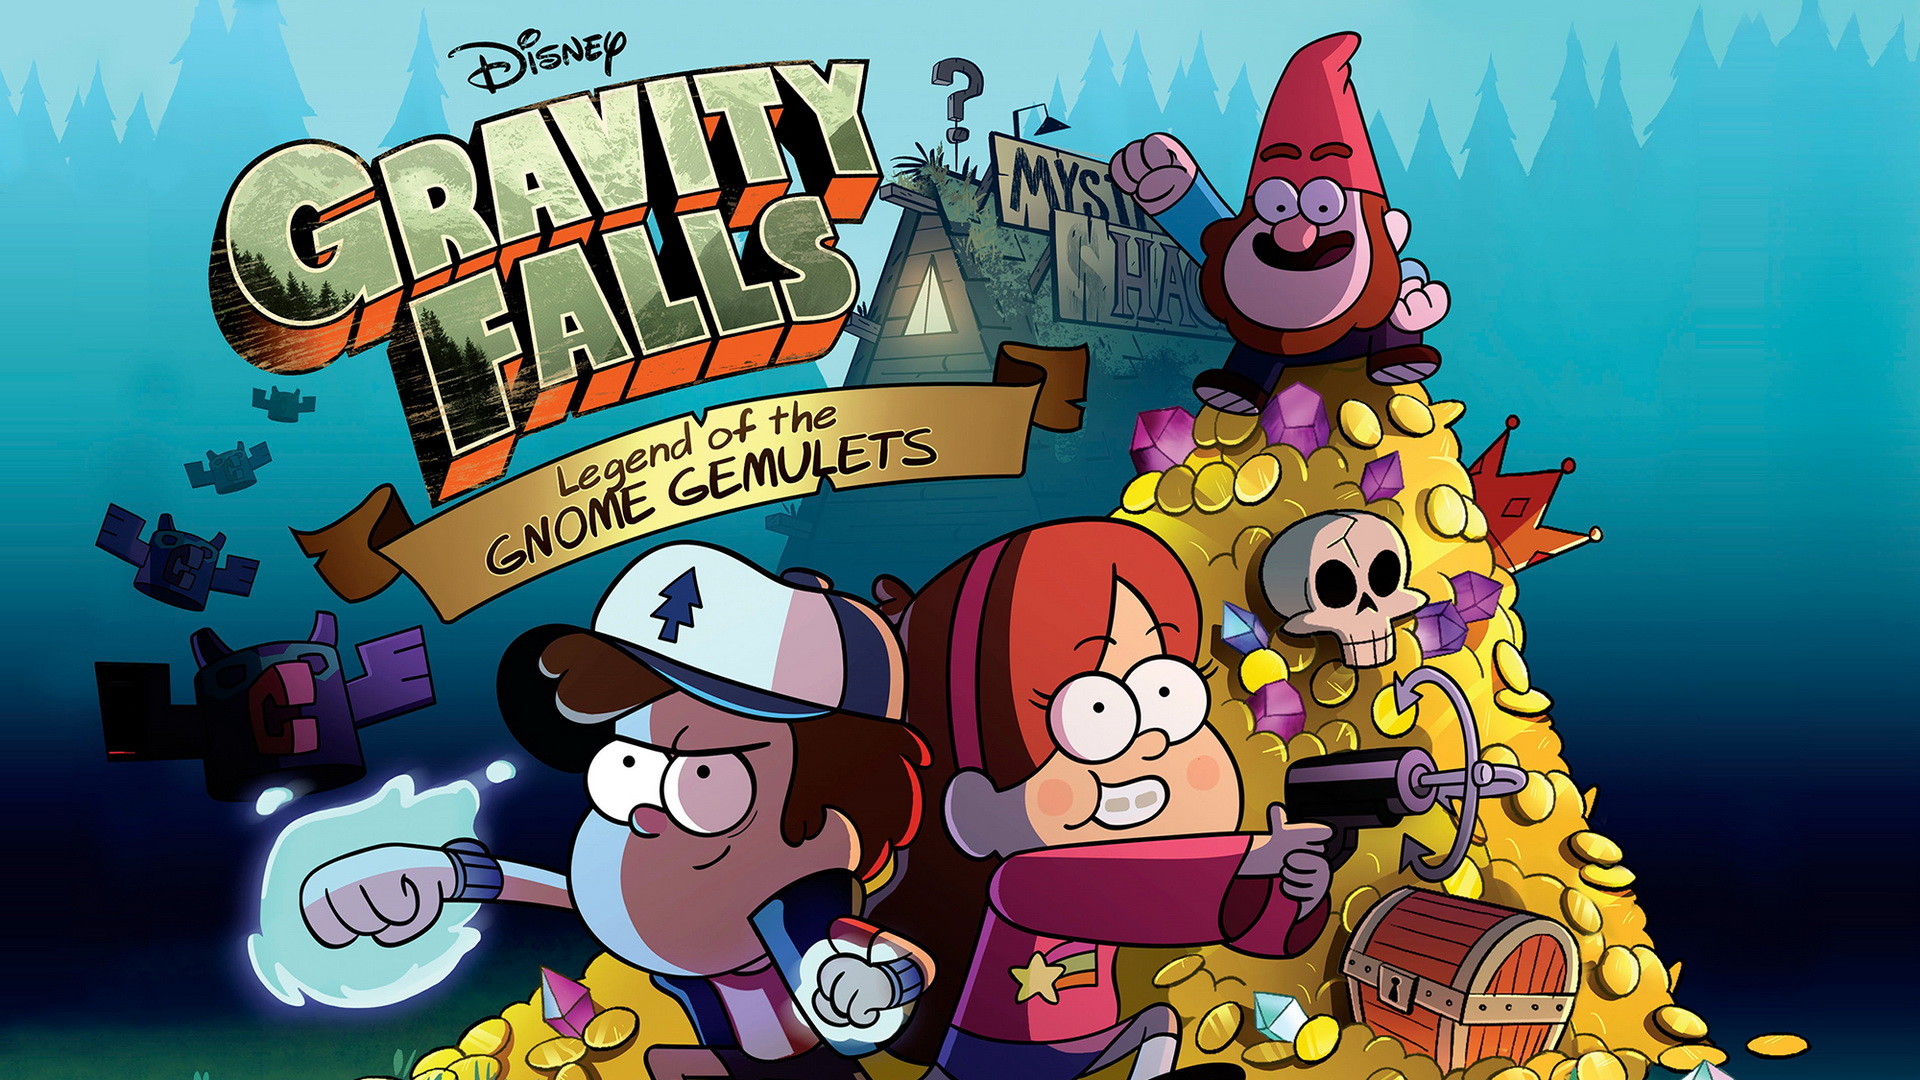 Gravity Falls – Legend of Gnome Gemulets